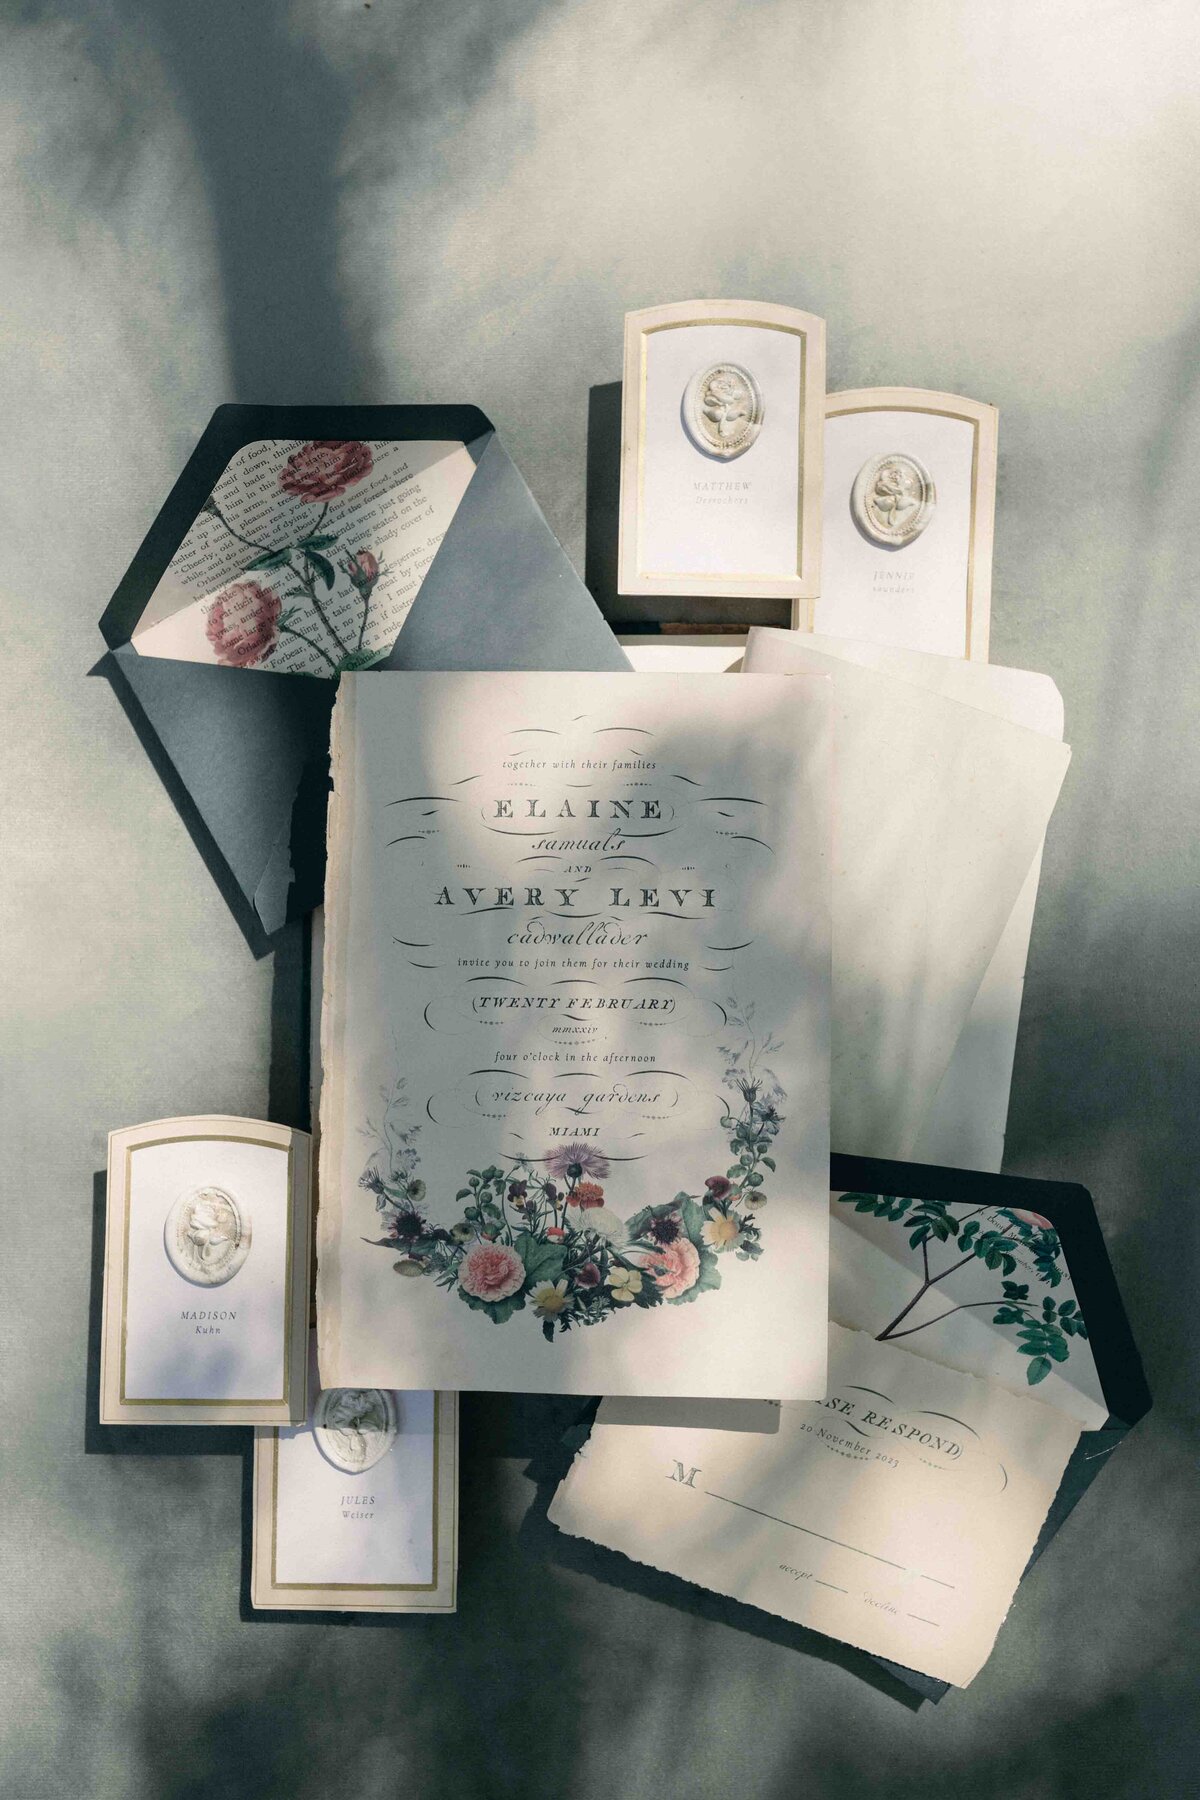 romantic-wedding-invitations